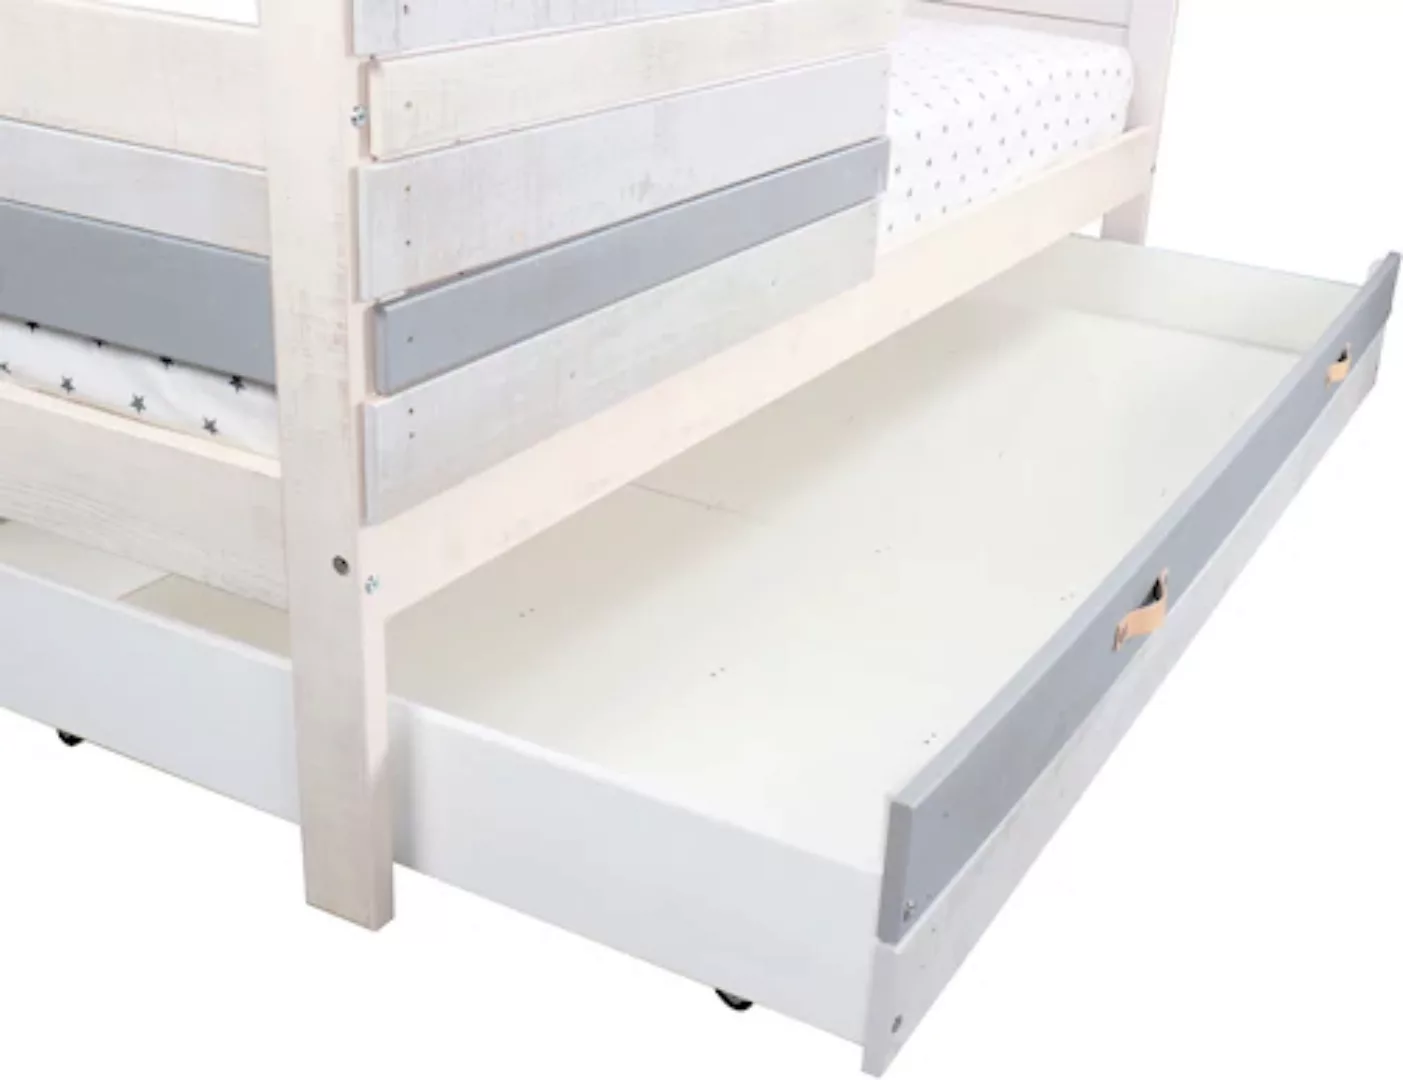 Lüttenhütt Bettschubkasten "Drollig", passend zum Bett Drollig günstig online kaufen